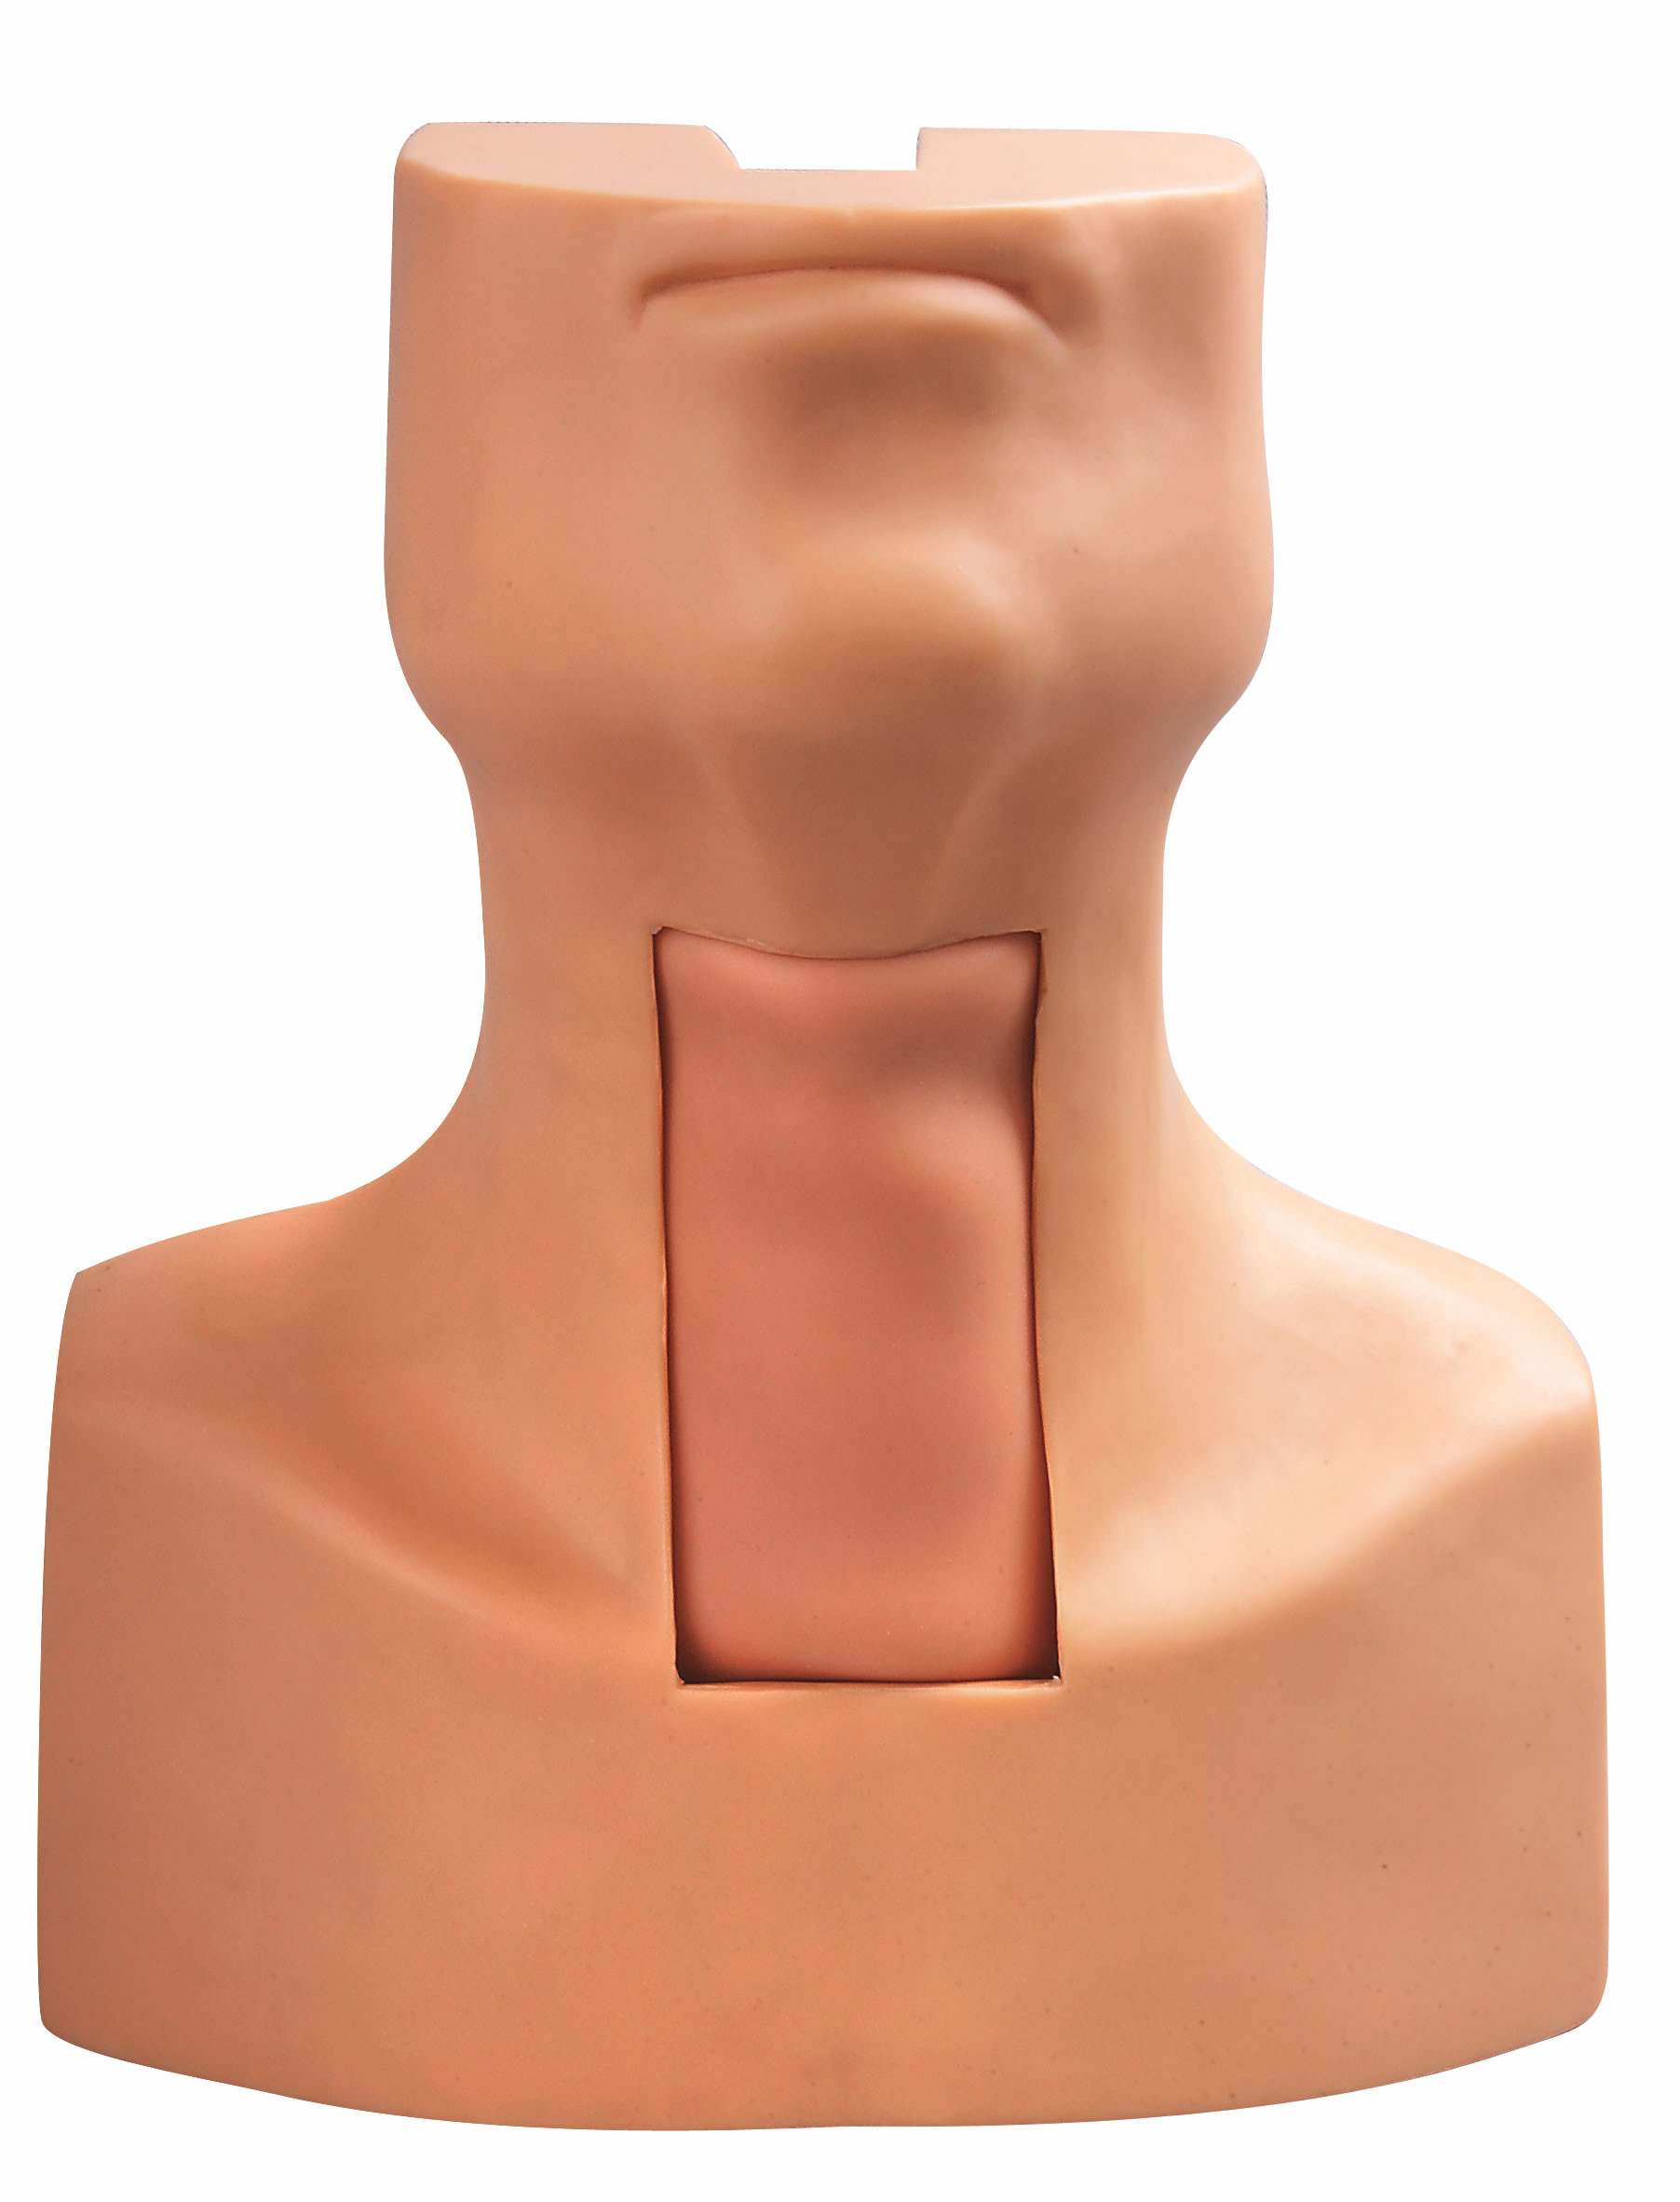 Model Intubasi Tenggorokan Trakeostomi dengan Simulated Trakea dan Leher untuk Latihan